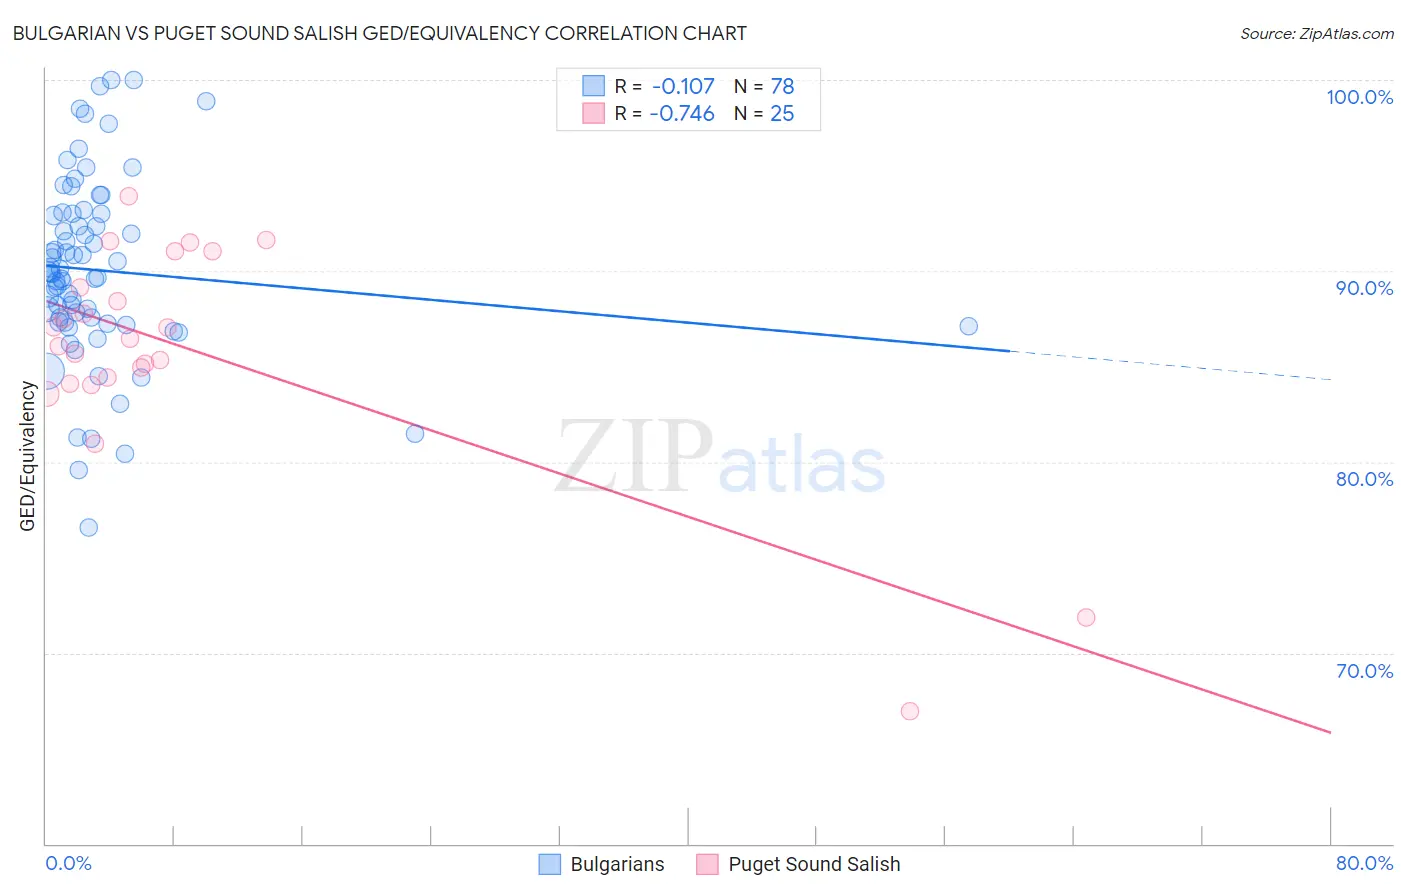 Bulgarian vs Puget Sound Salish GED/Equivalency